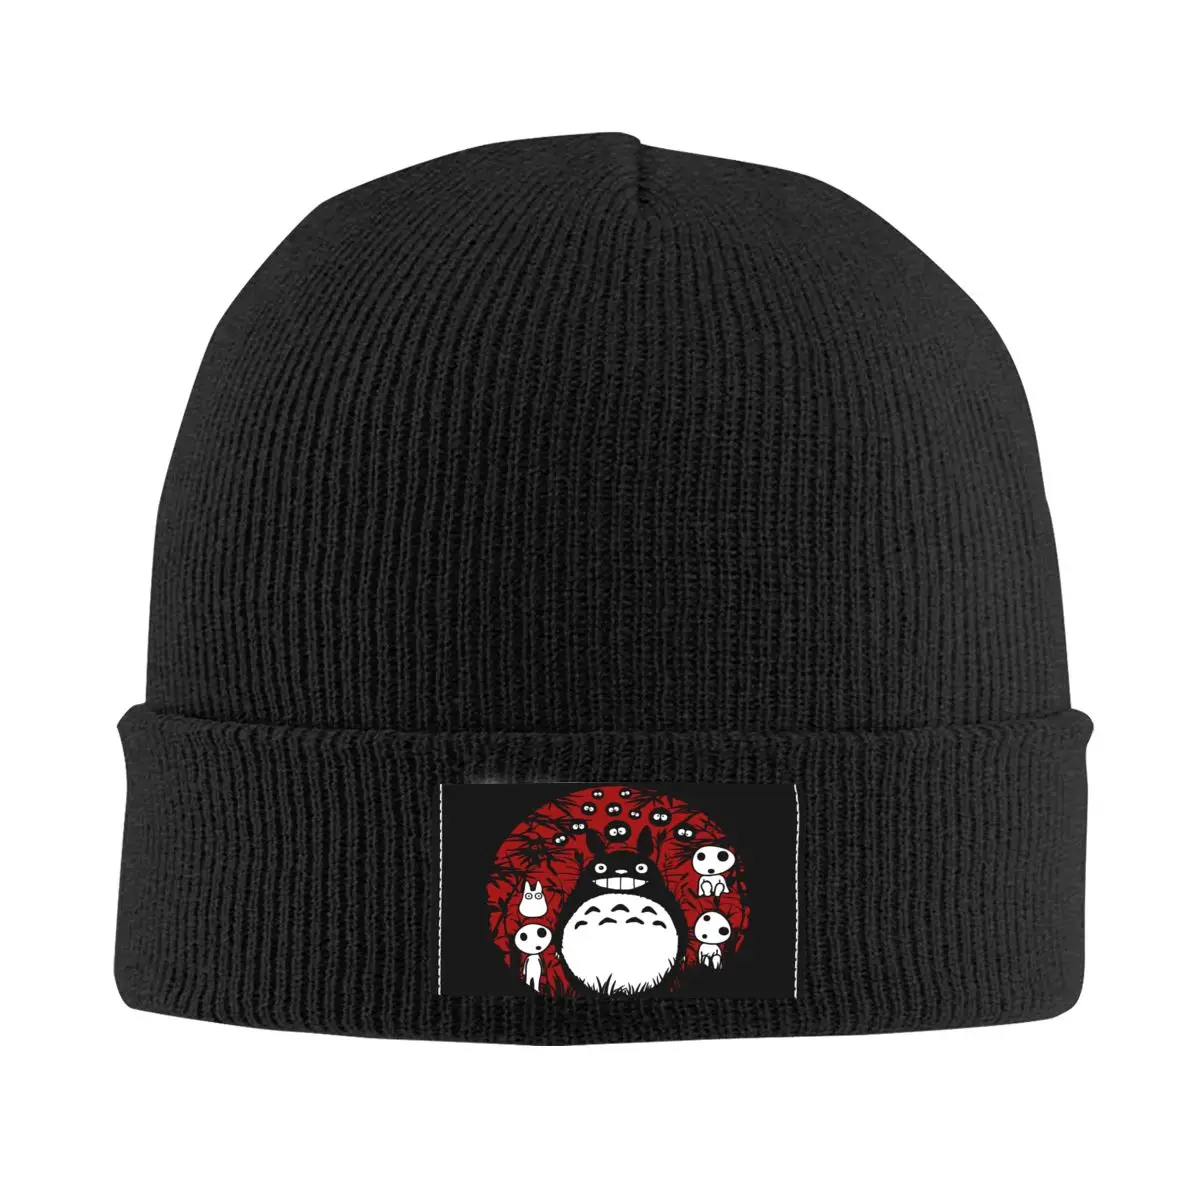 My Neighbor Totoro Bonnet Hats Street Knit Hat For Women Men Winter Warm Forest Spirit Skullies Beanies Caps 1